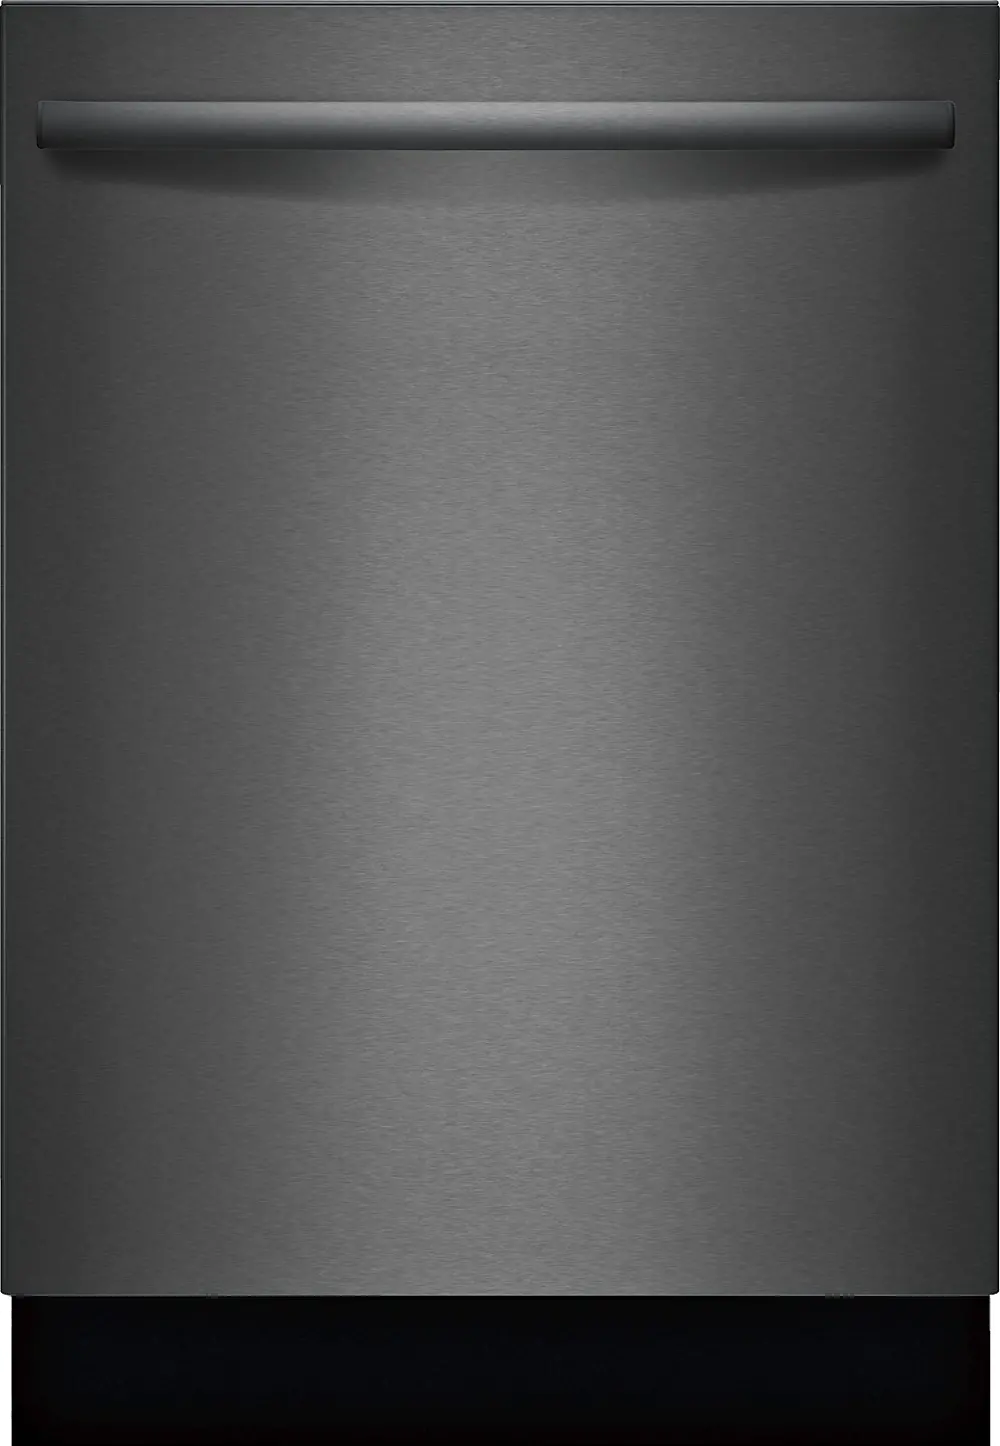 SHXM4AY54N Bosch 100 Series Dishwasher with InfoLight- Black Stainless Steel-1